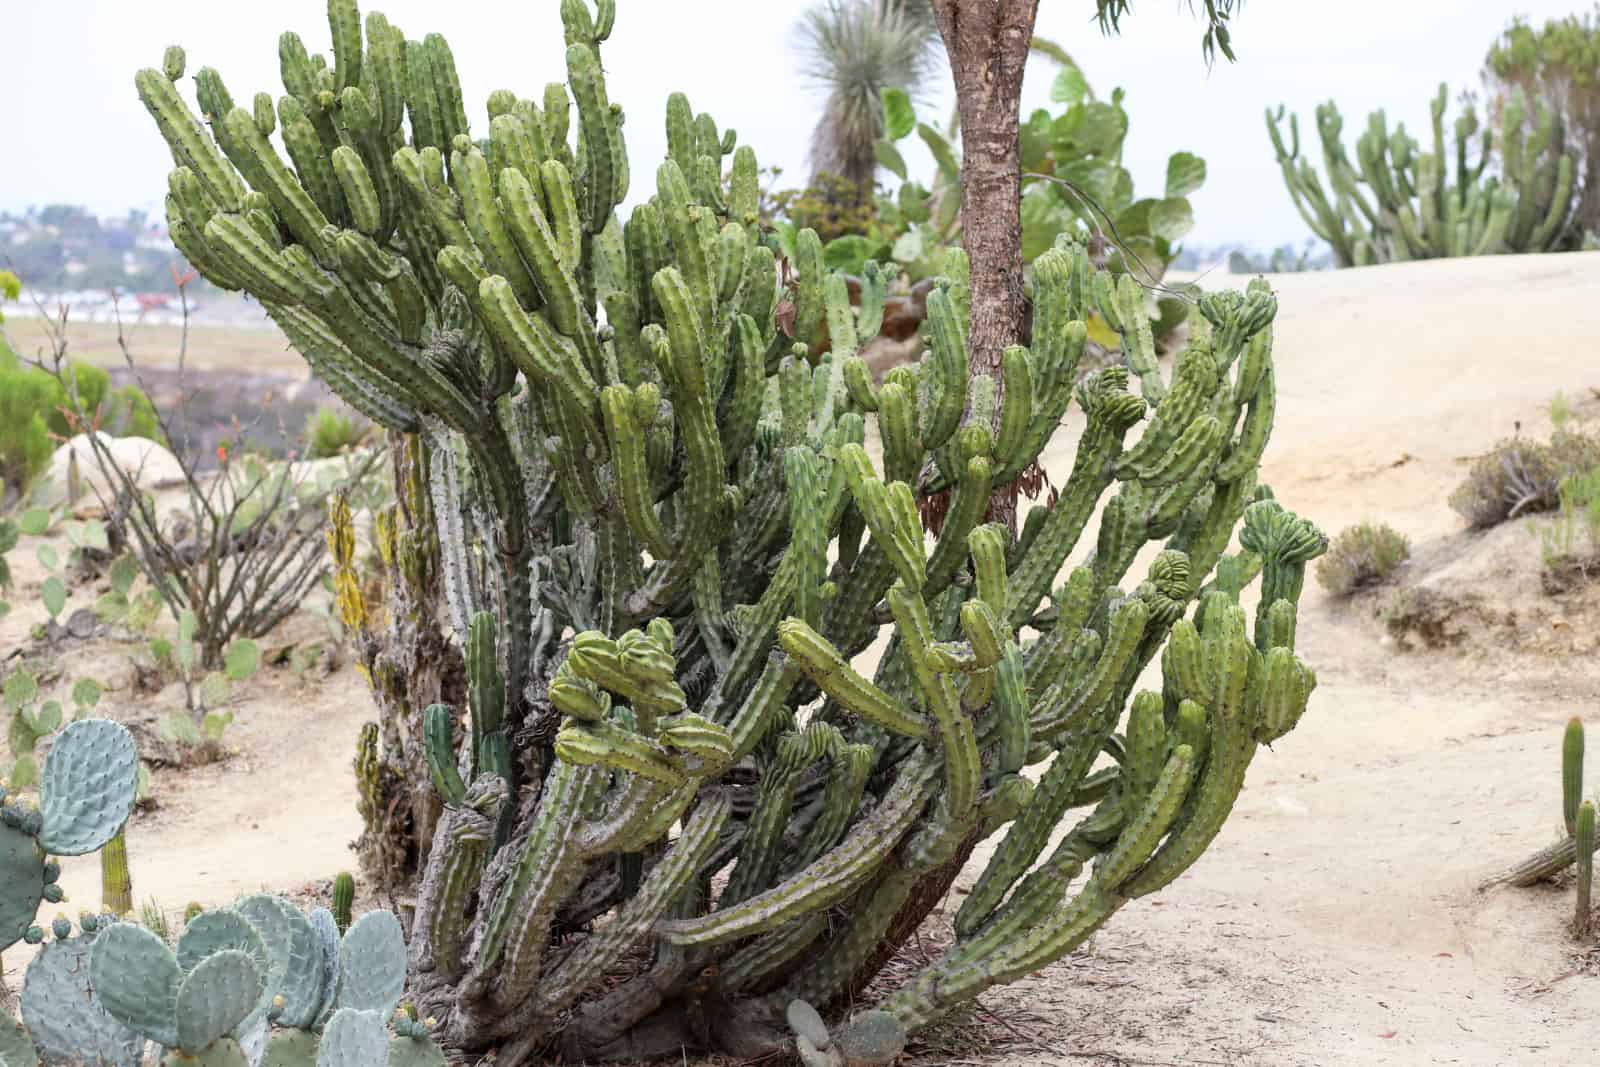 A large blue myrtle cactus in a sandy desert garden